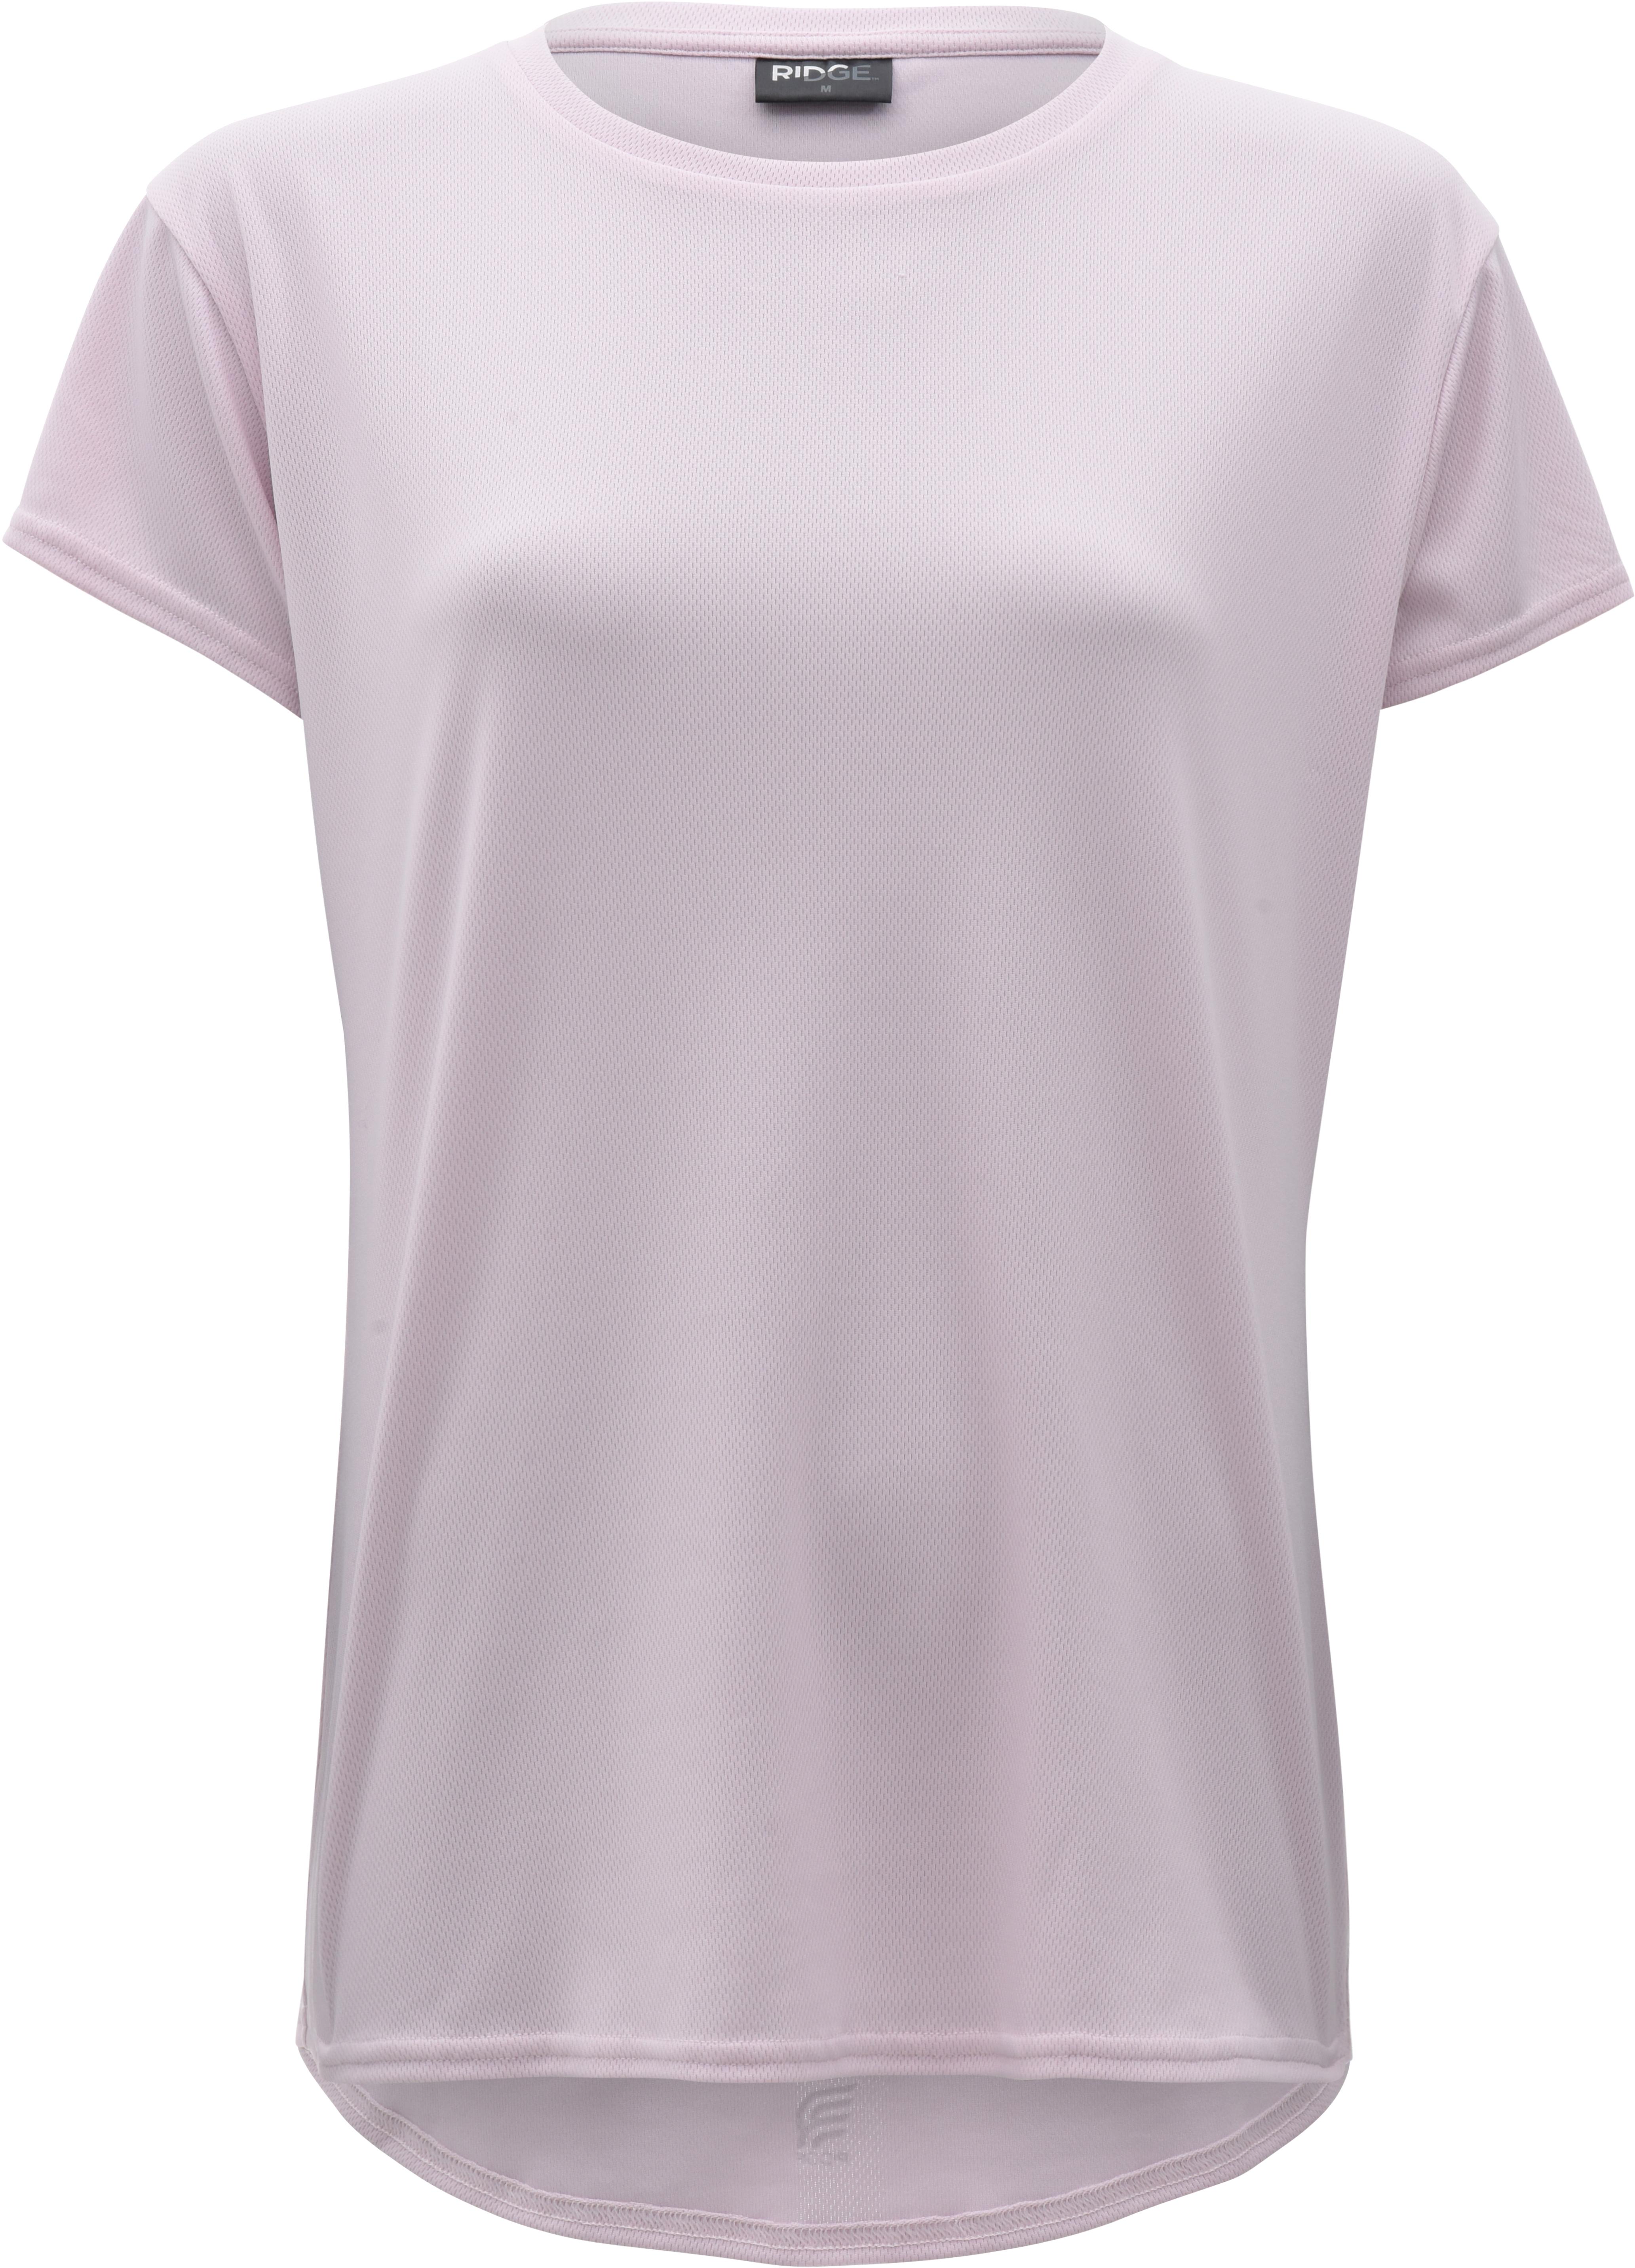 Ridge Womens Cycling T Shirt - Pink Medium